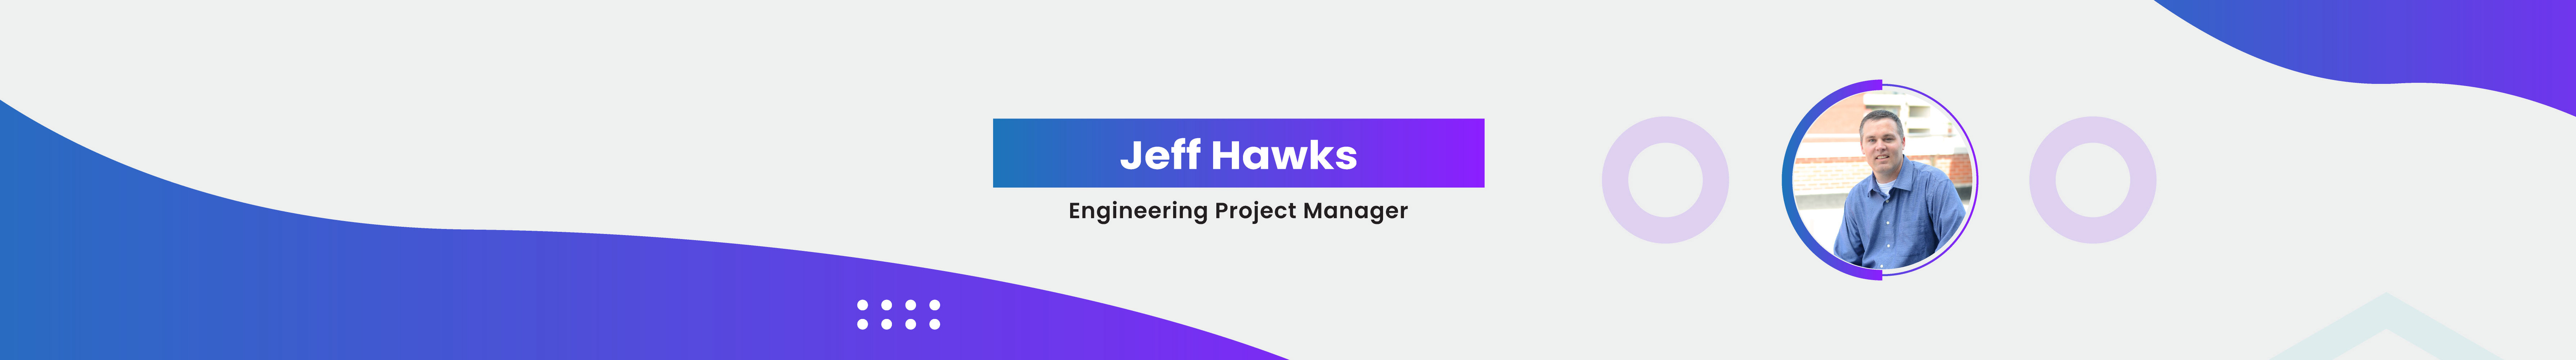 Jeff Hawks's profile banner